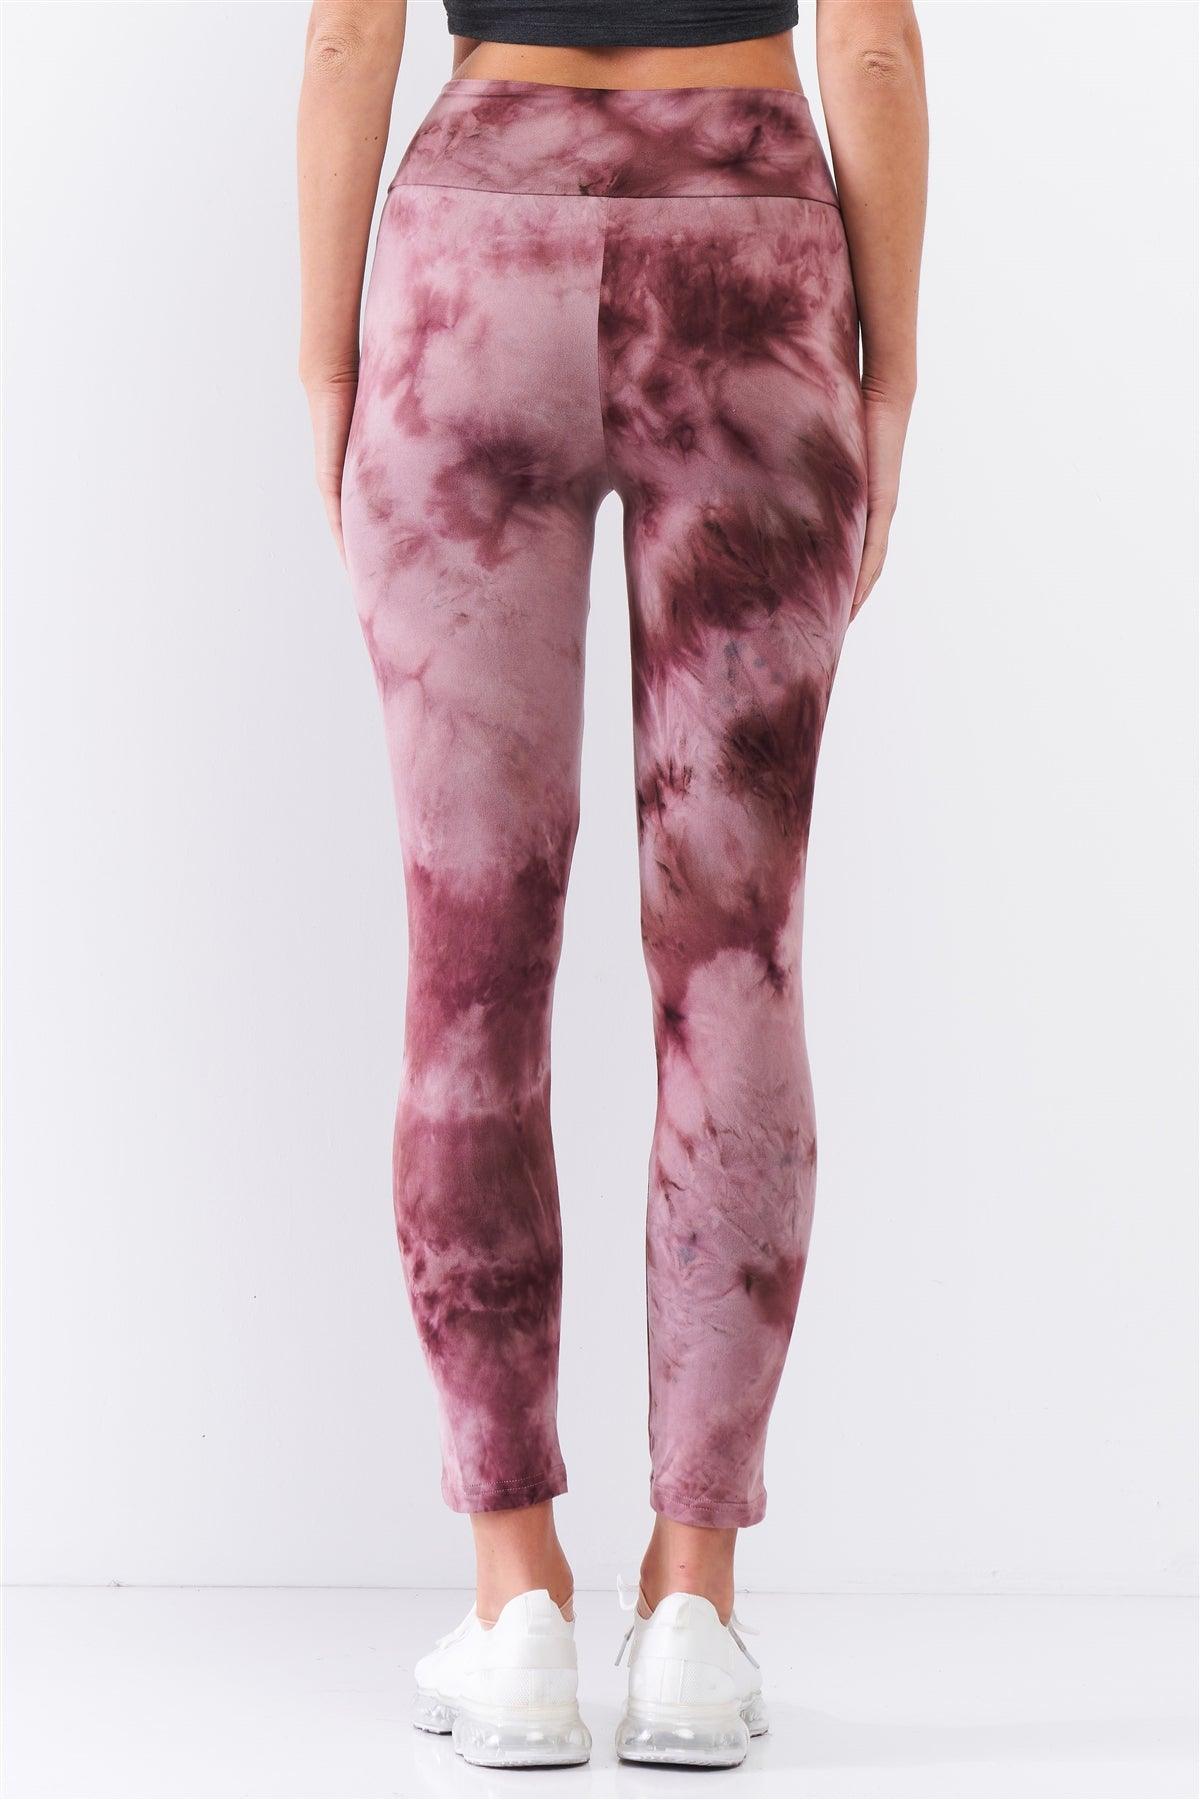 Comfy Plum Pink Tie-Dye High Waisted Stretchy Yoga Legging Pants /3-2-1